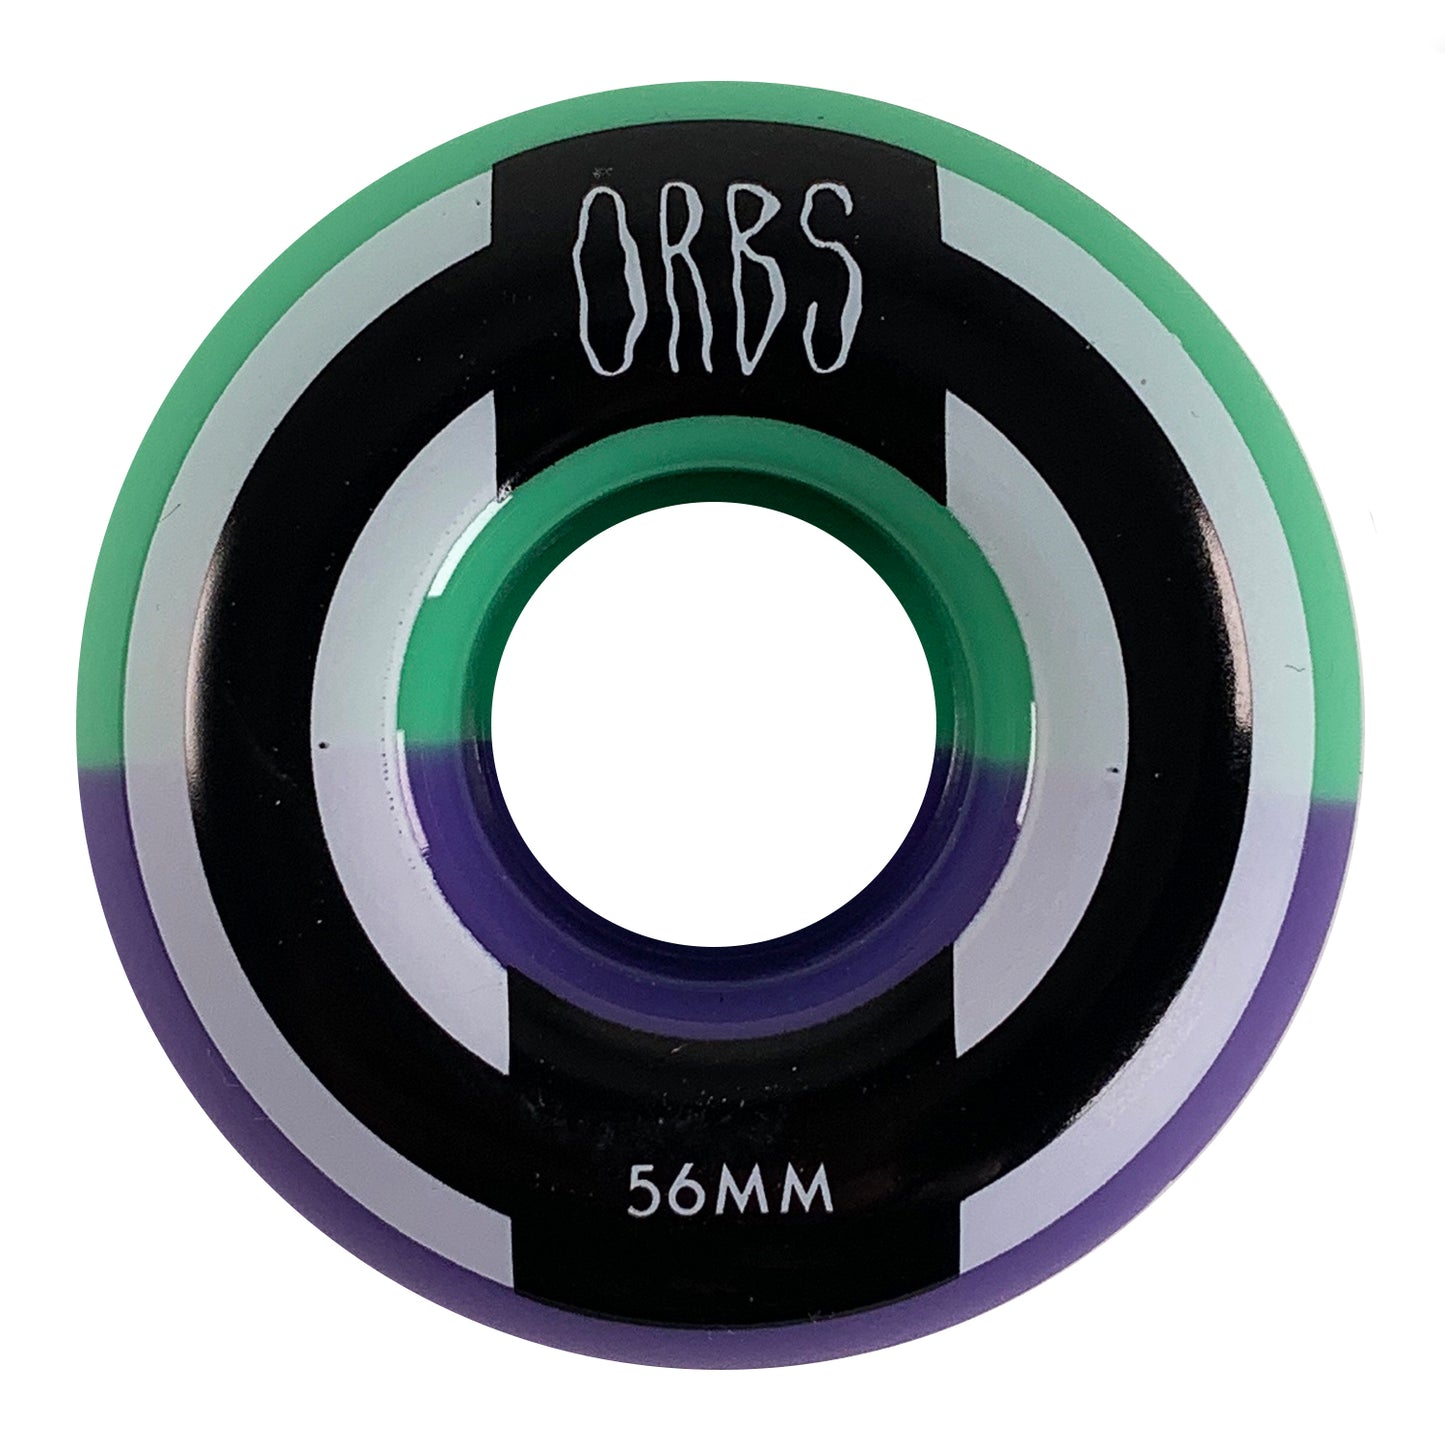 Orbs - 56mm - 99a - Apparitions Splits - Mint/Lavender - Prime Delux Store